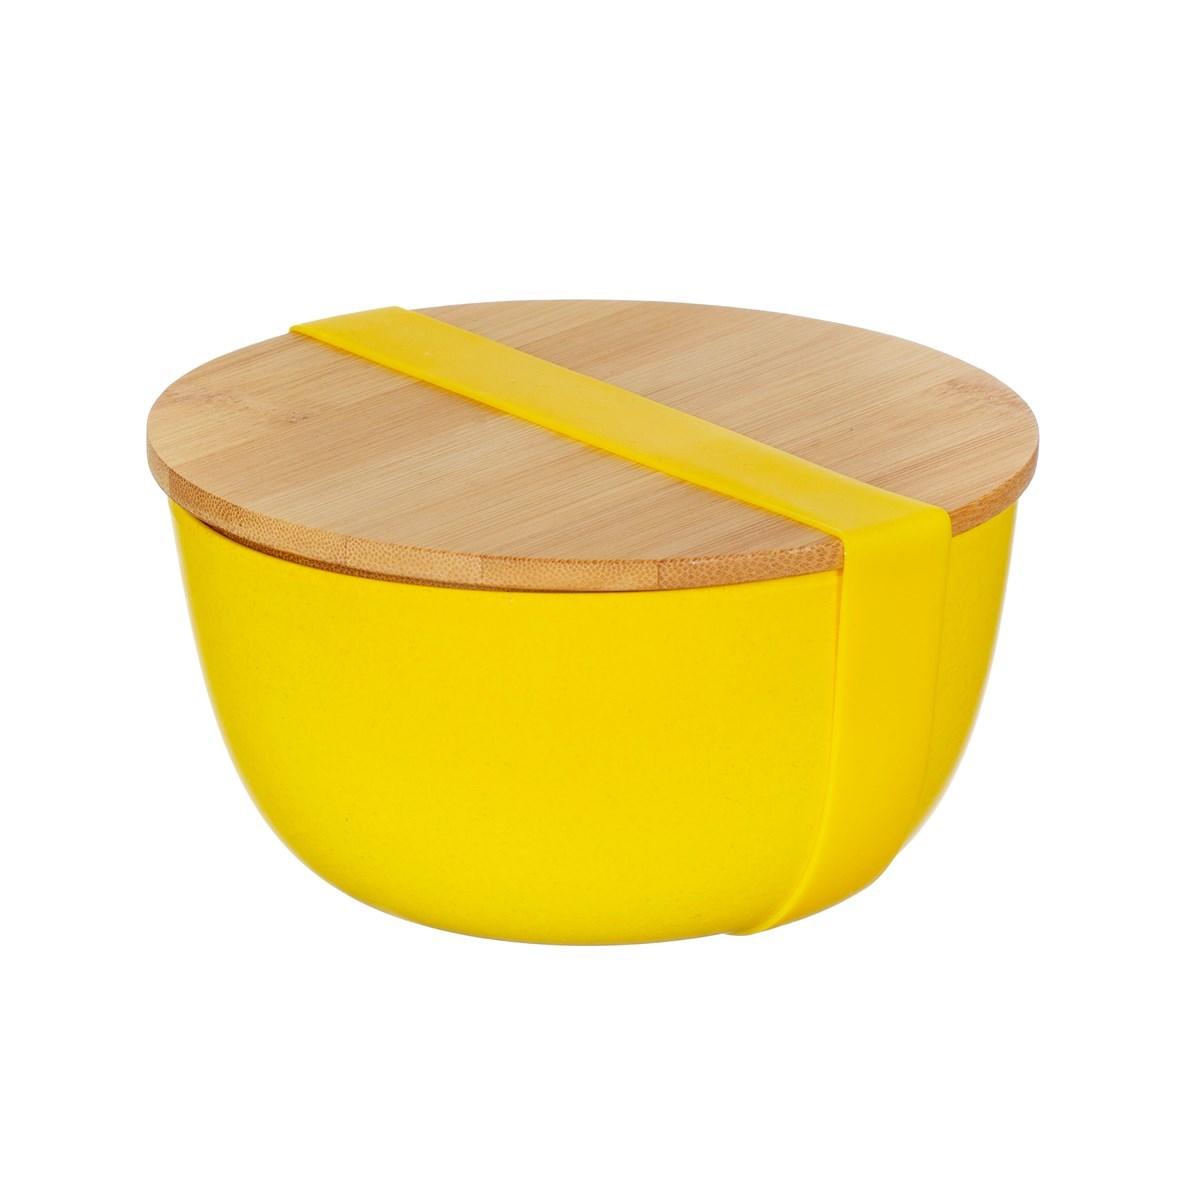 yellow bowl